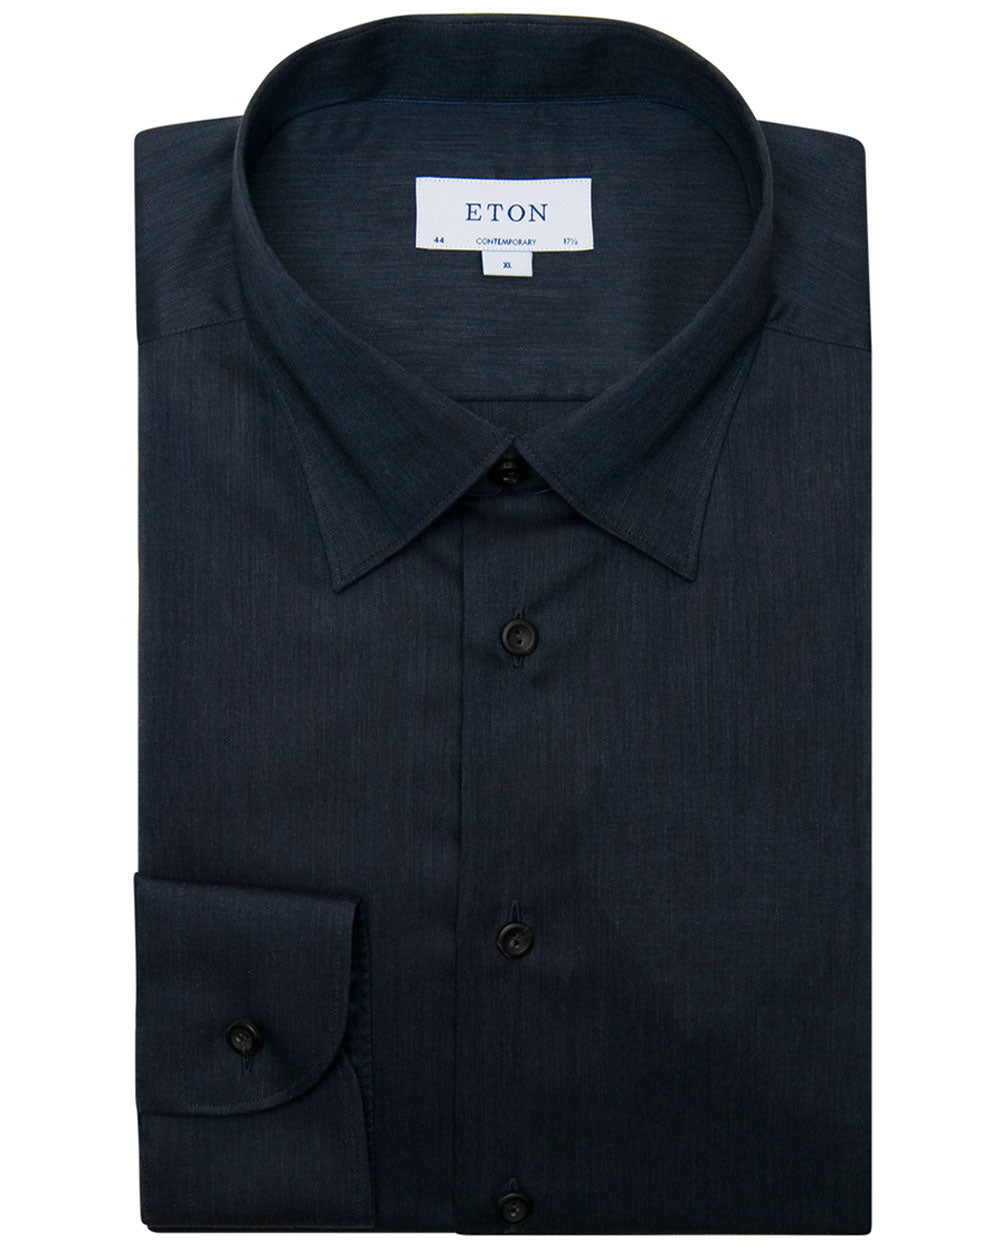 Navy Blue Cotton Herringbone Dress Shirt